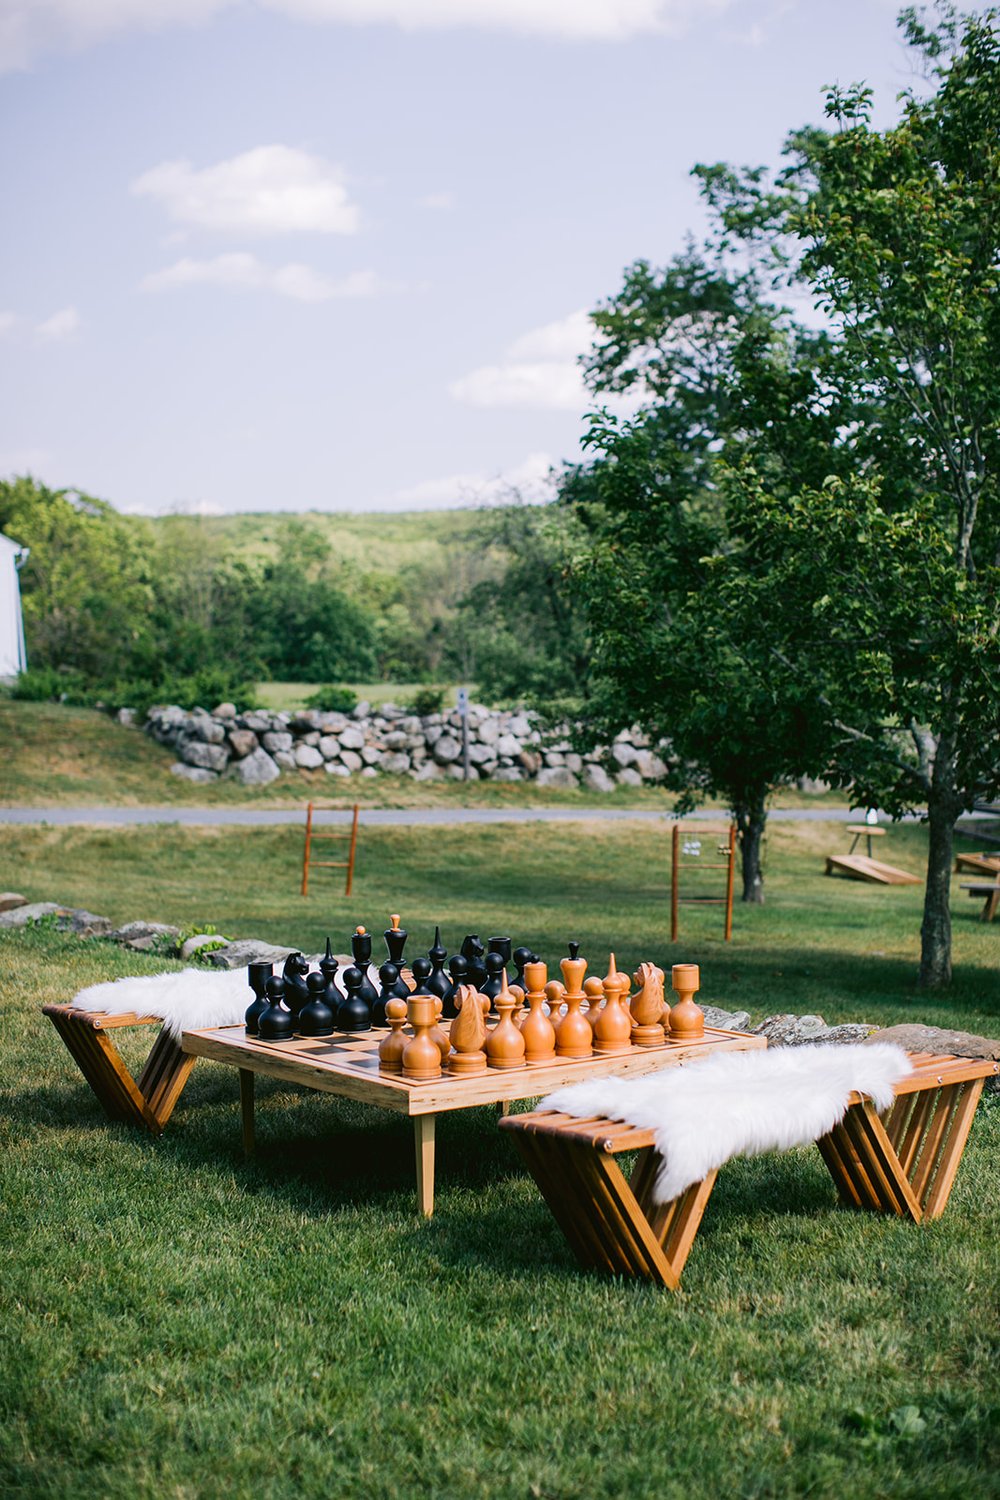 Giant Chess Lawn Game Rentals Glynwood Farm New York photo by Mel Barlow 1.jpg